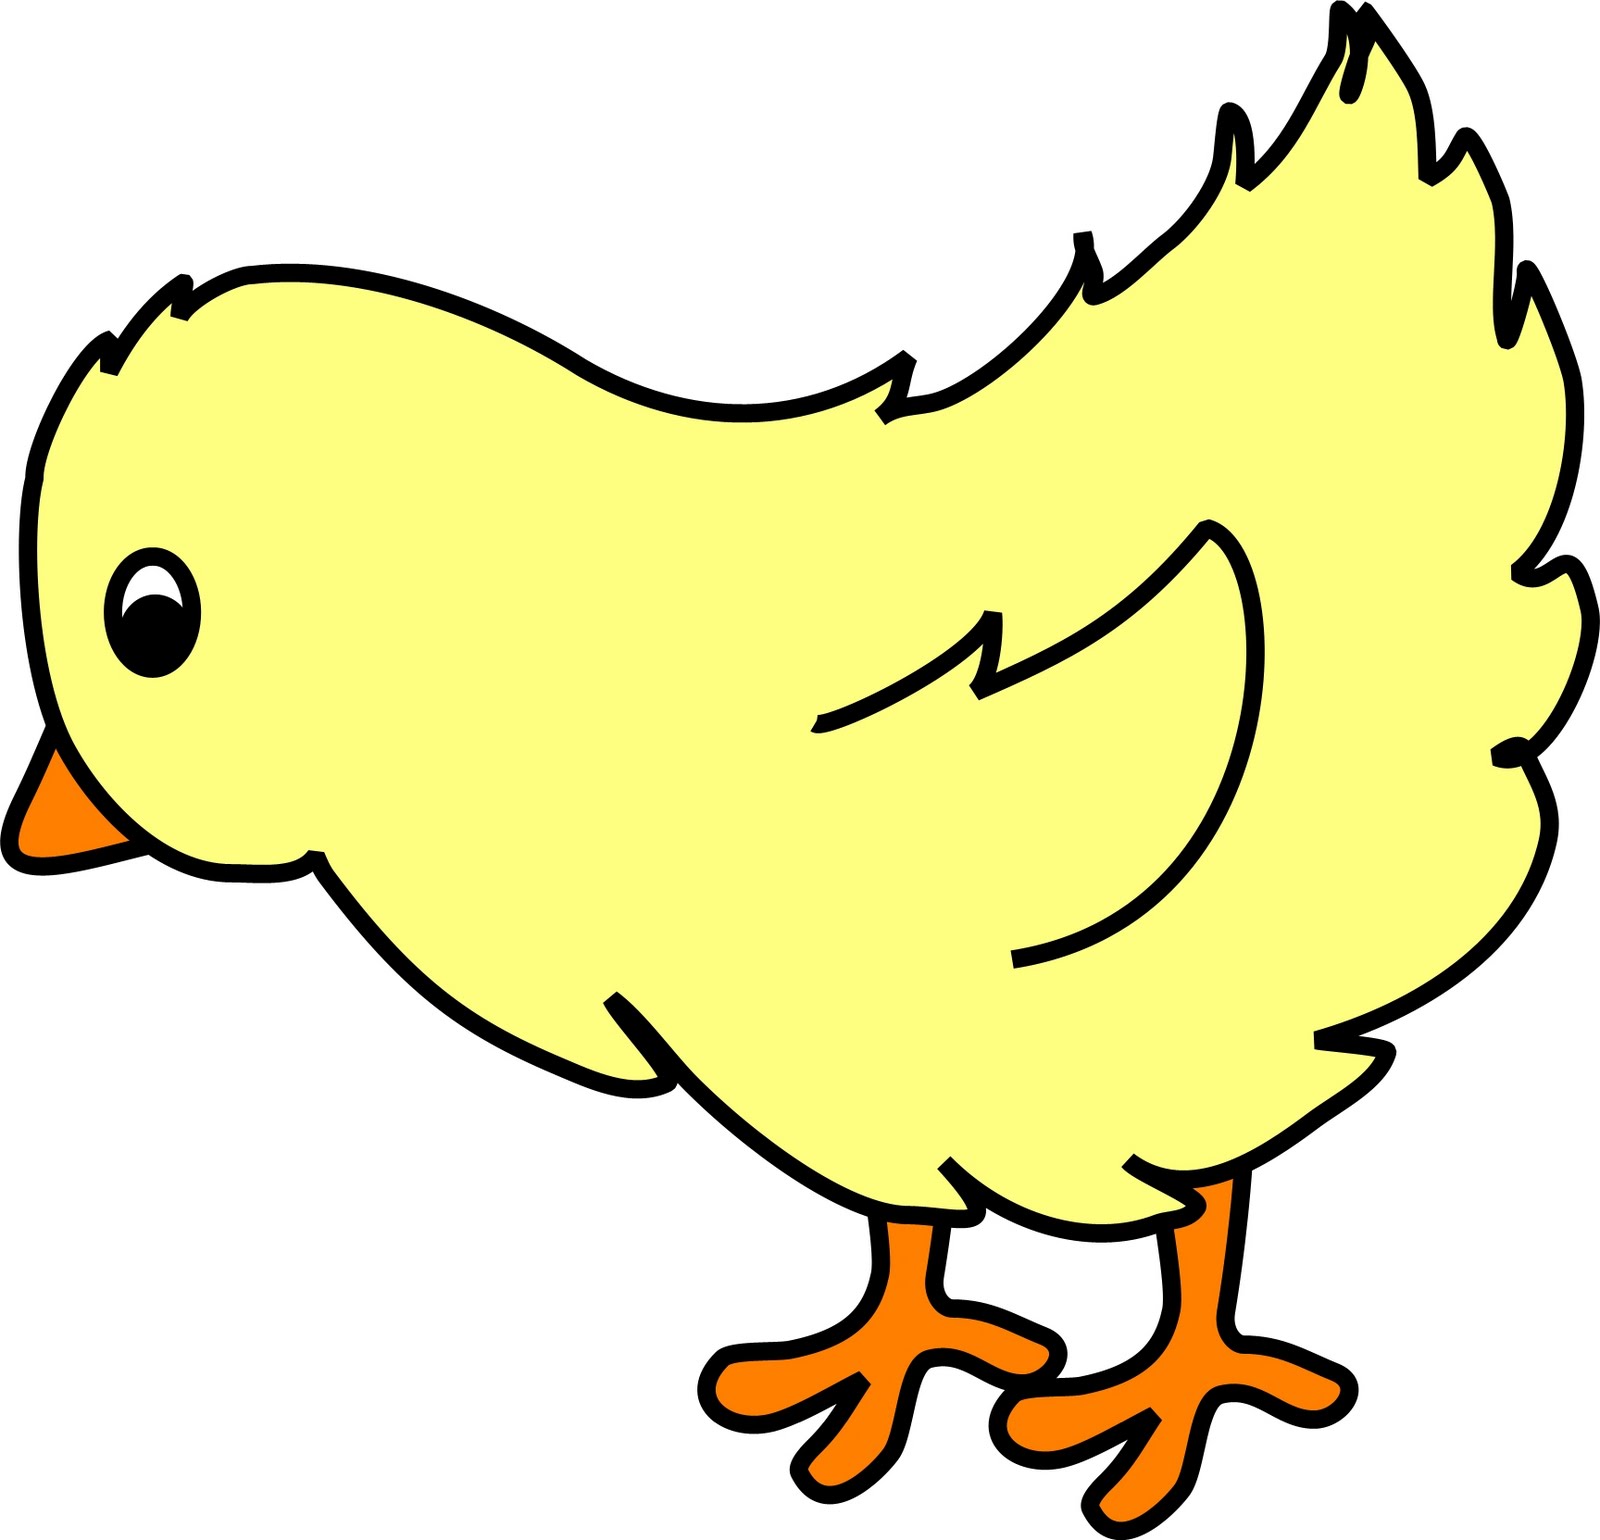 Chick cartoon clipart image #22269